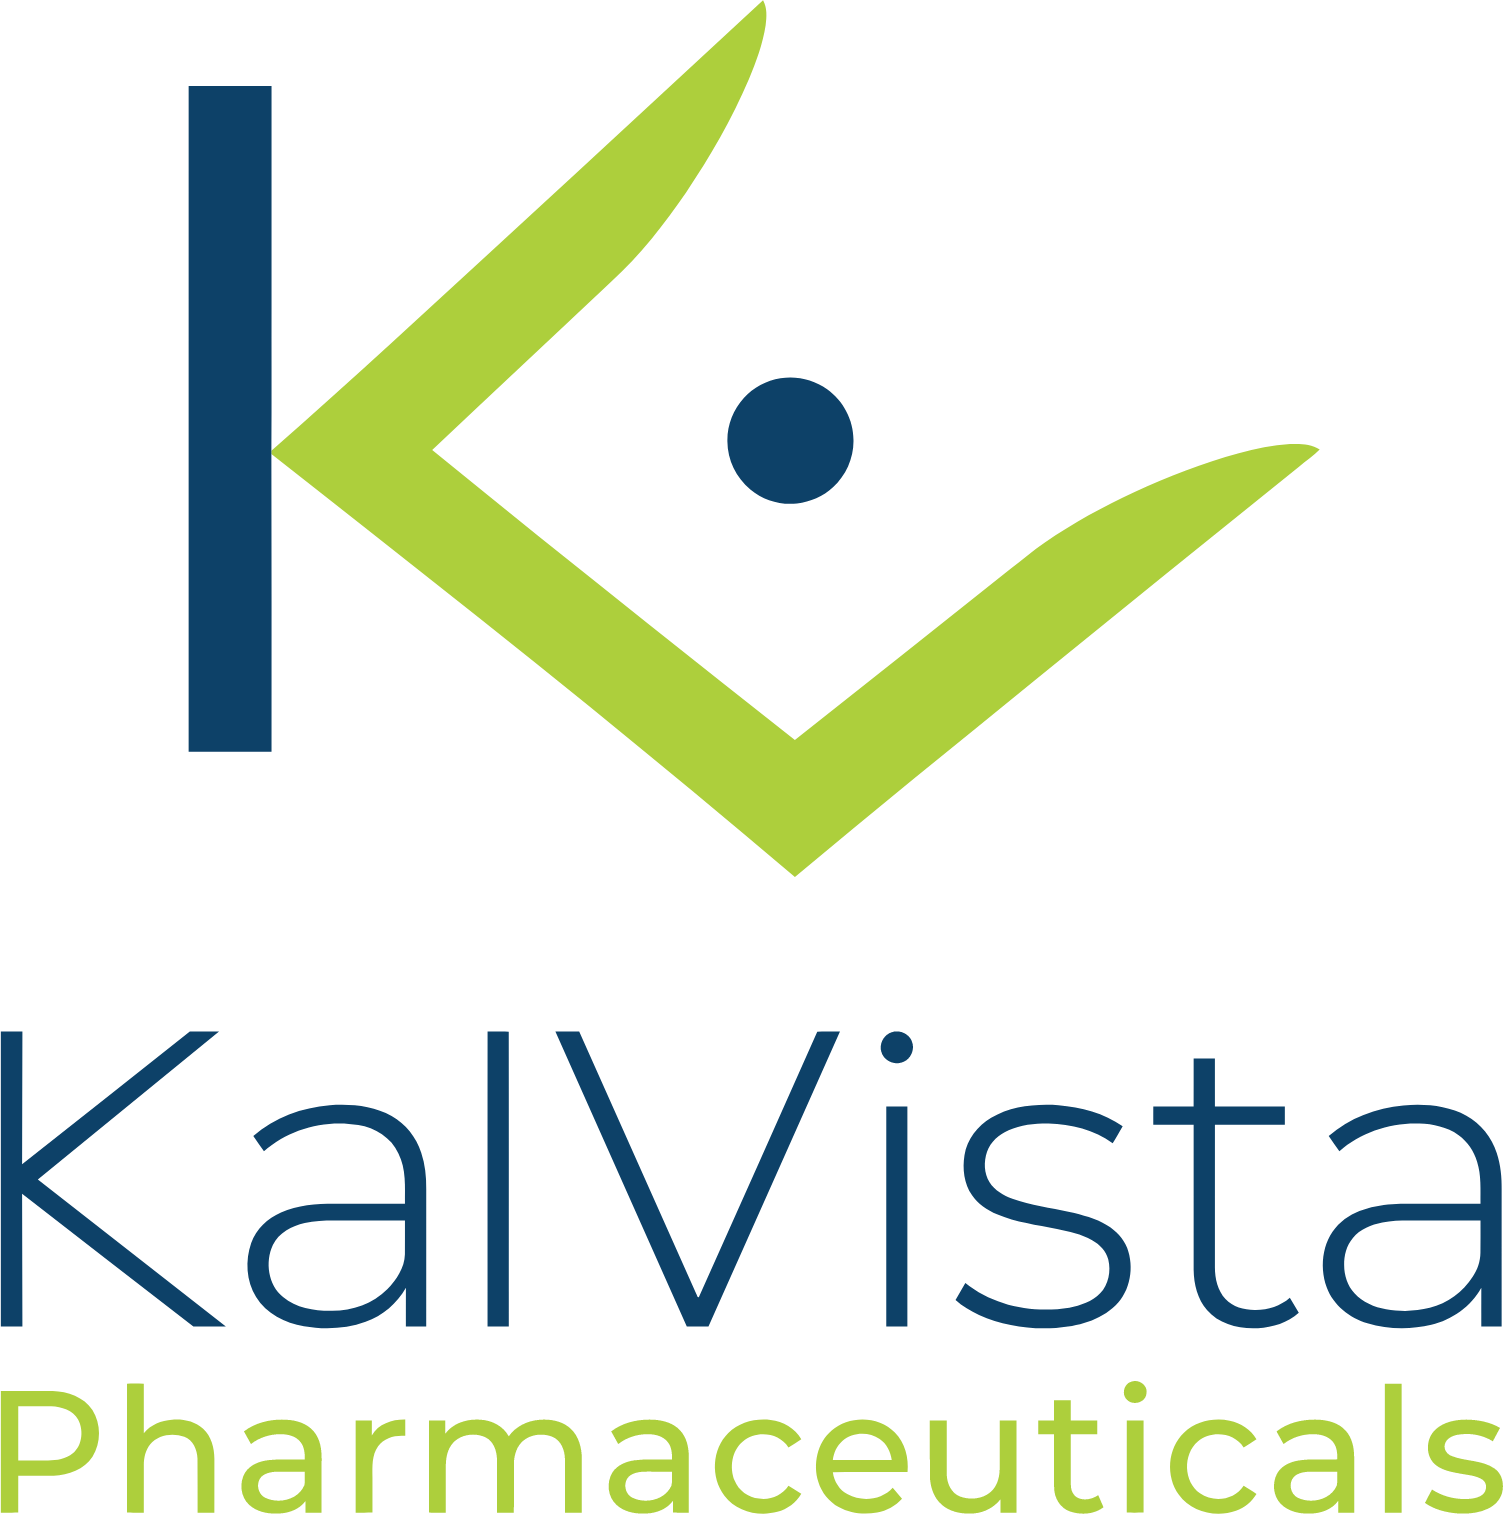 KalVista Pharmaceuticals logo large (transparent PNG)